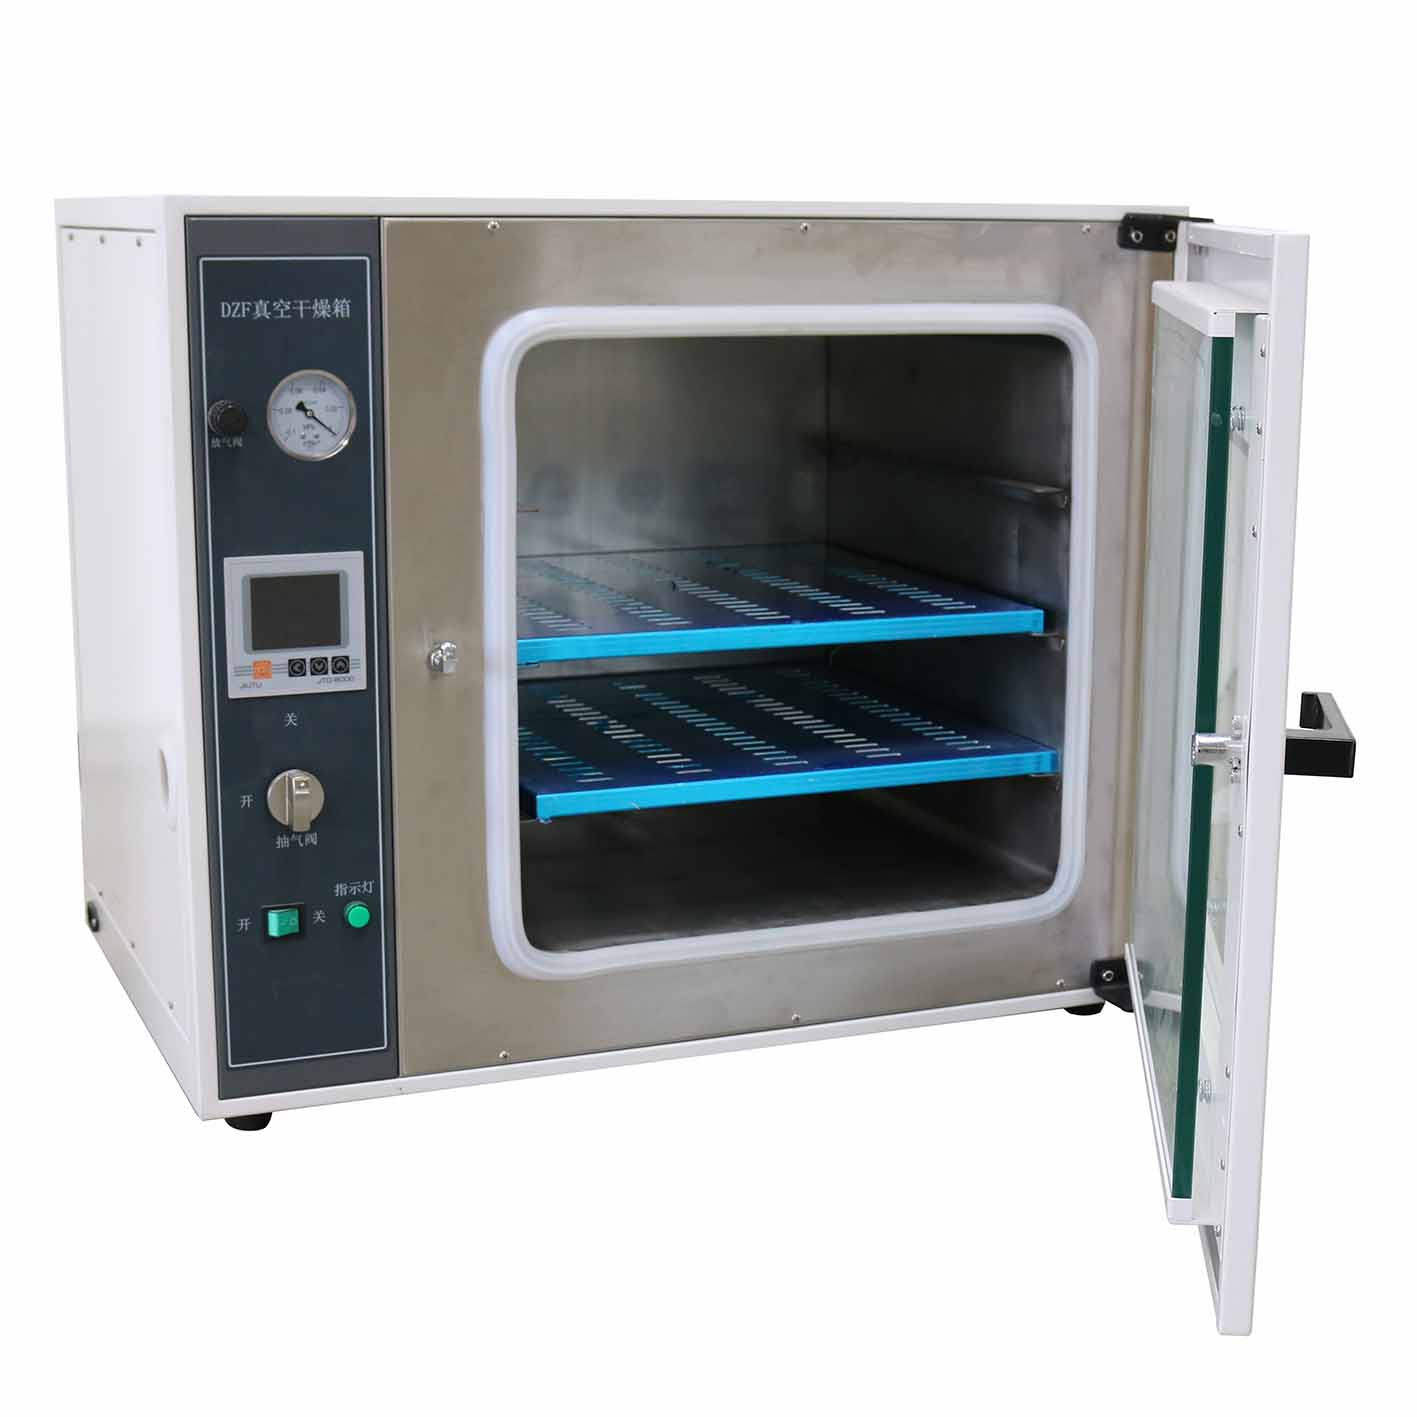 laboratory oven